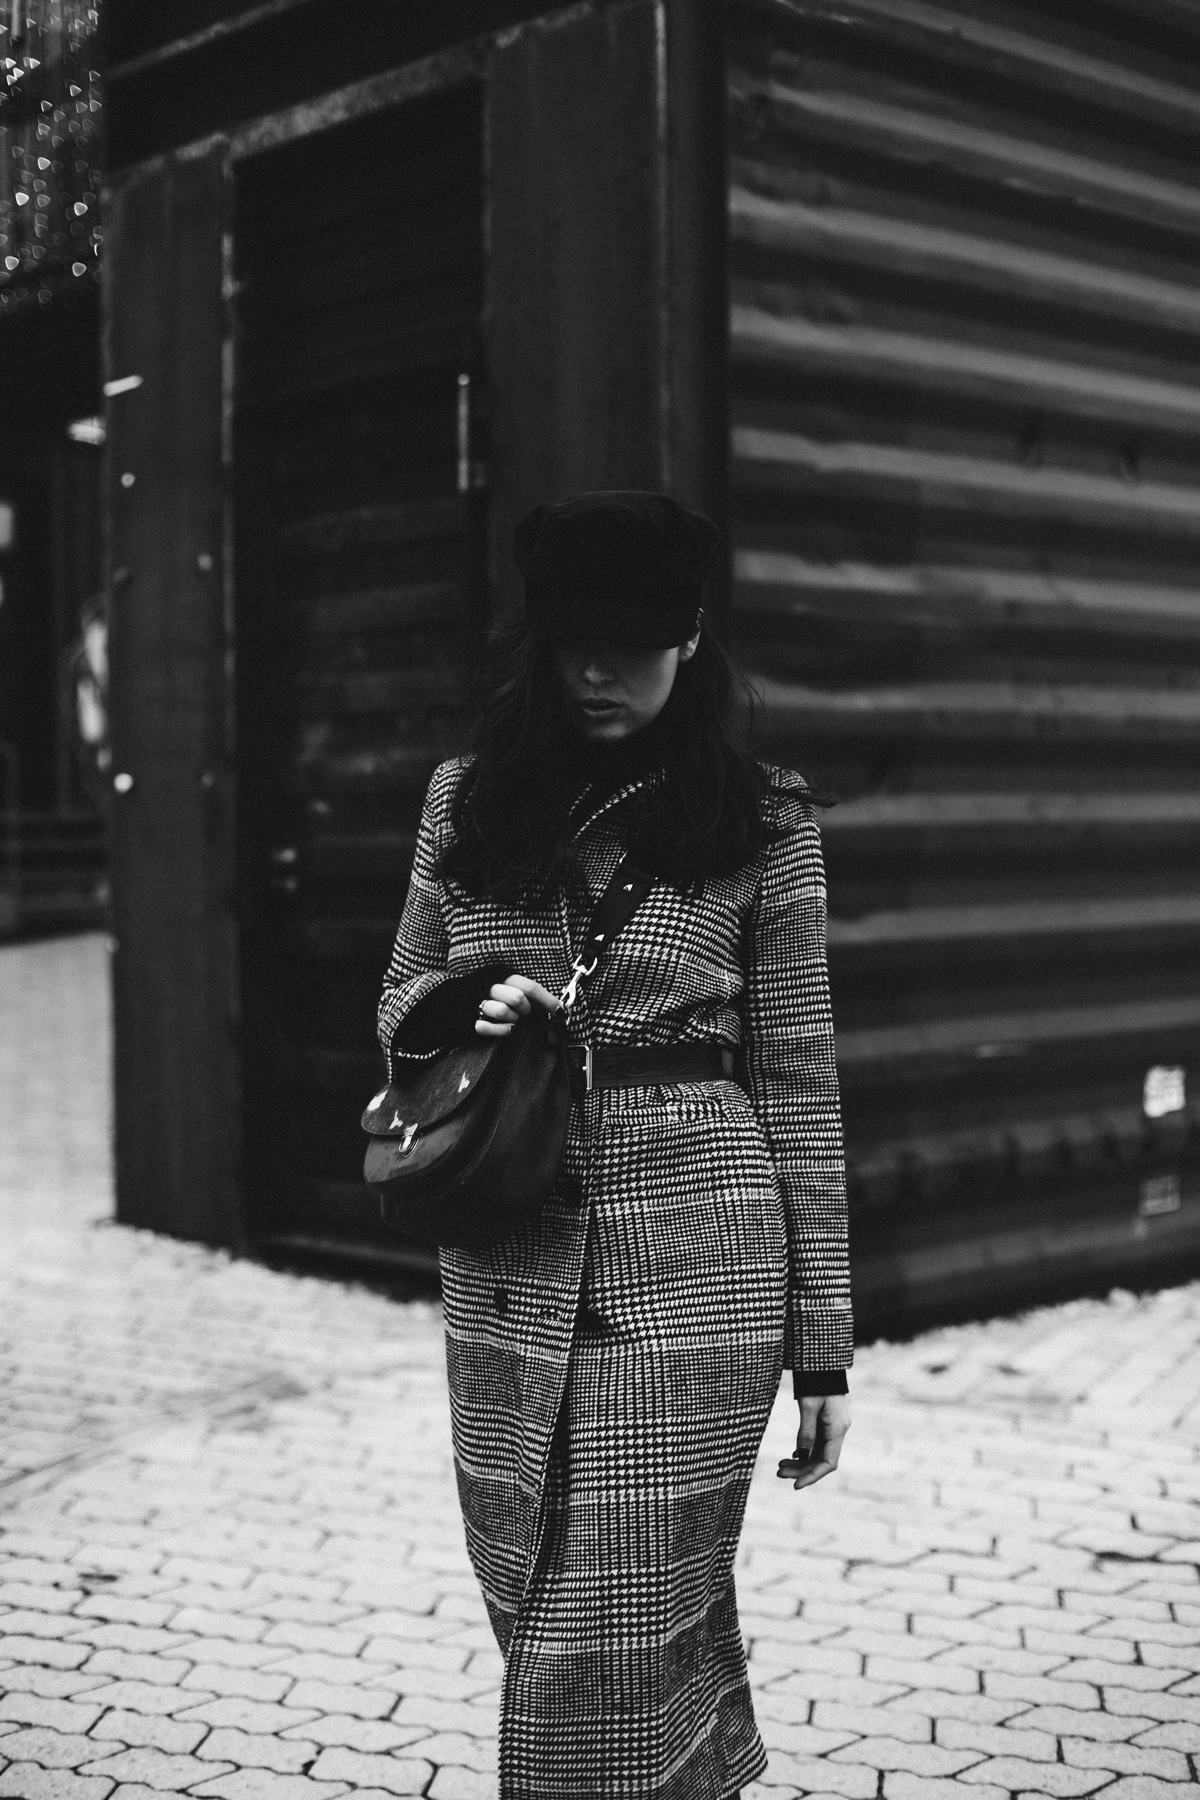 Karomantel – Winterlook – Streetstyle München – Fashionblog Deutschland – Blogger DE – Overknee Stiefel rot – Trends 2017